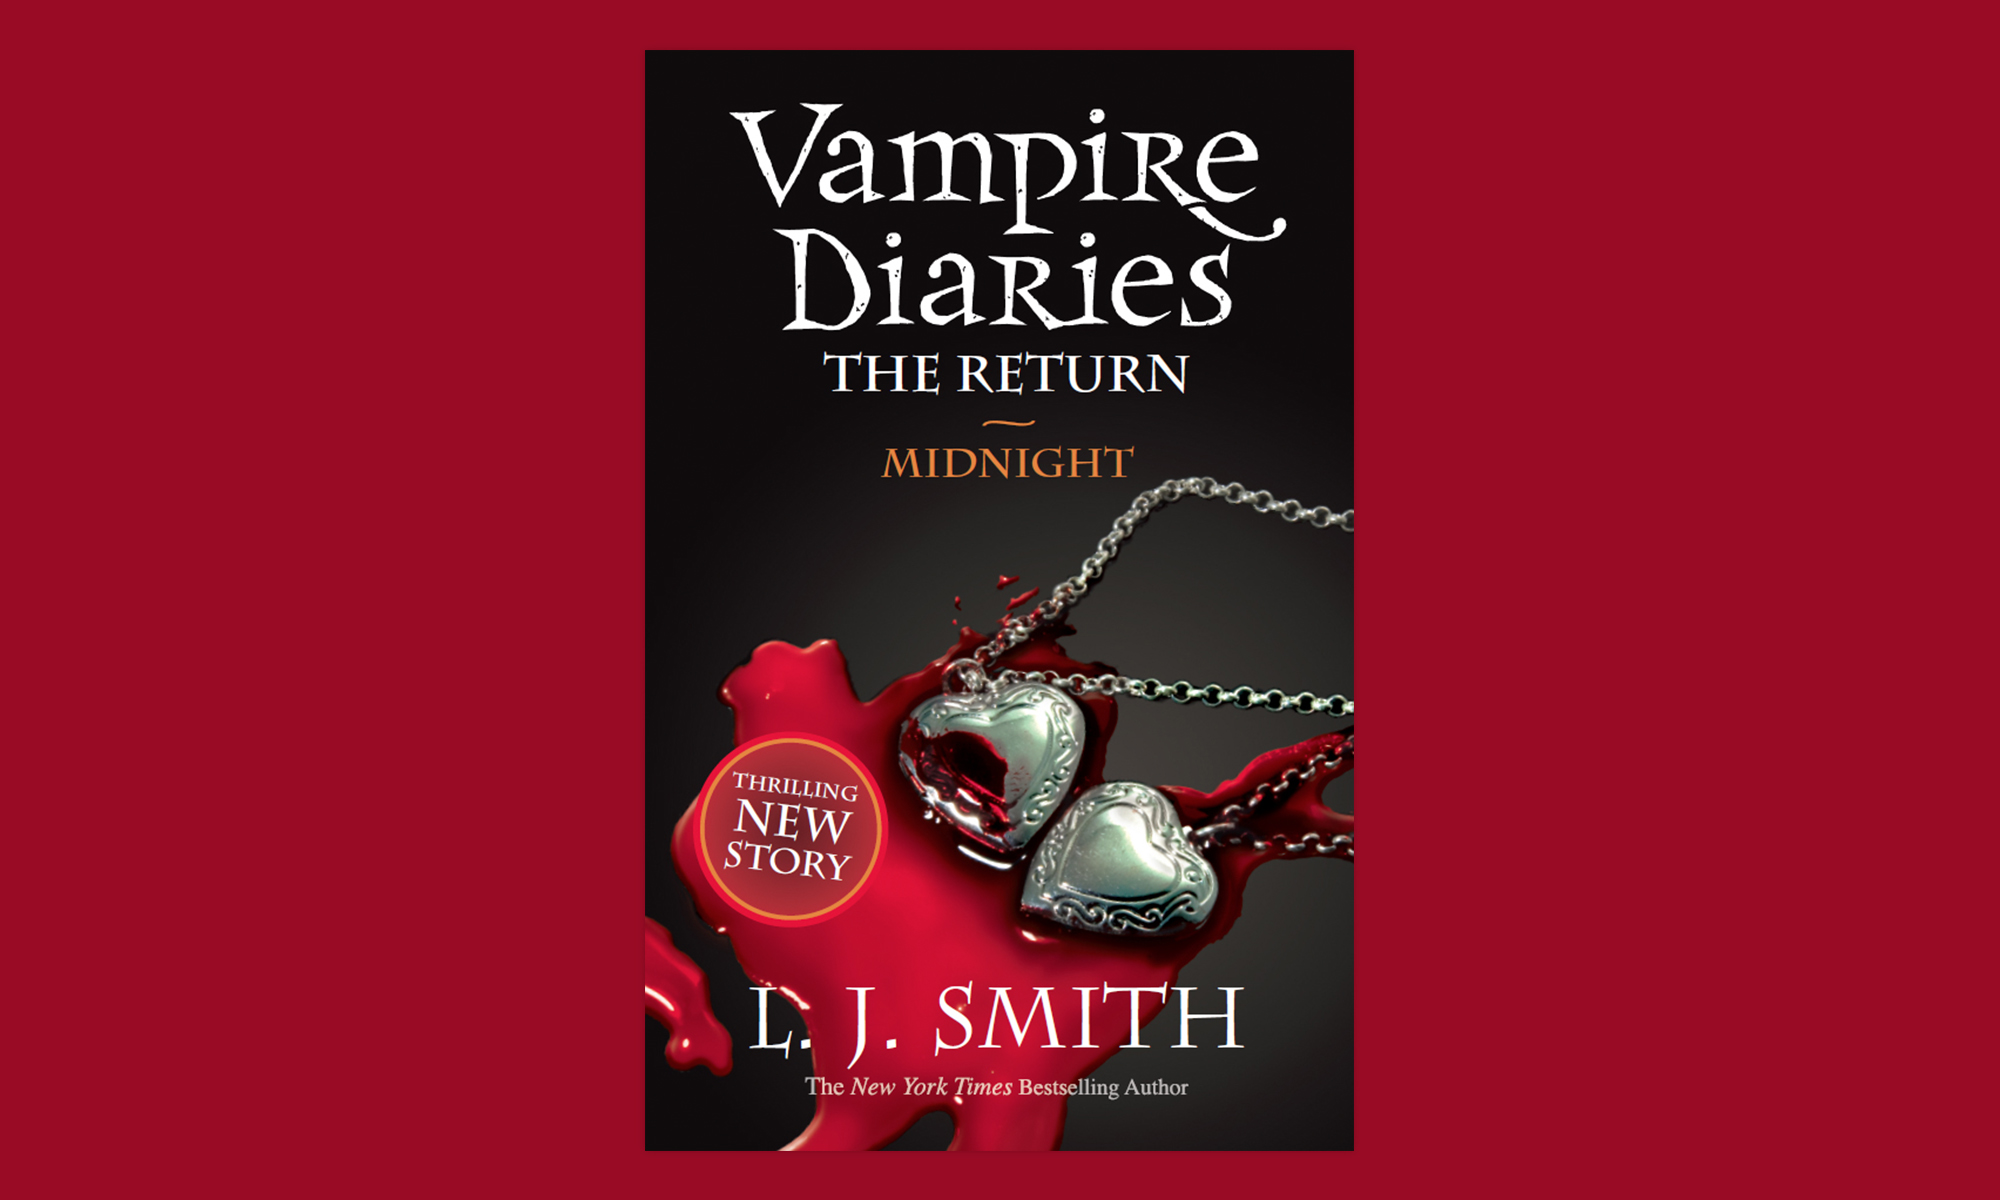 Vampire Diaries - Book cover artwork photography